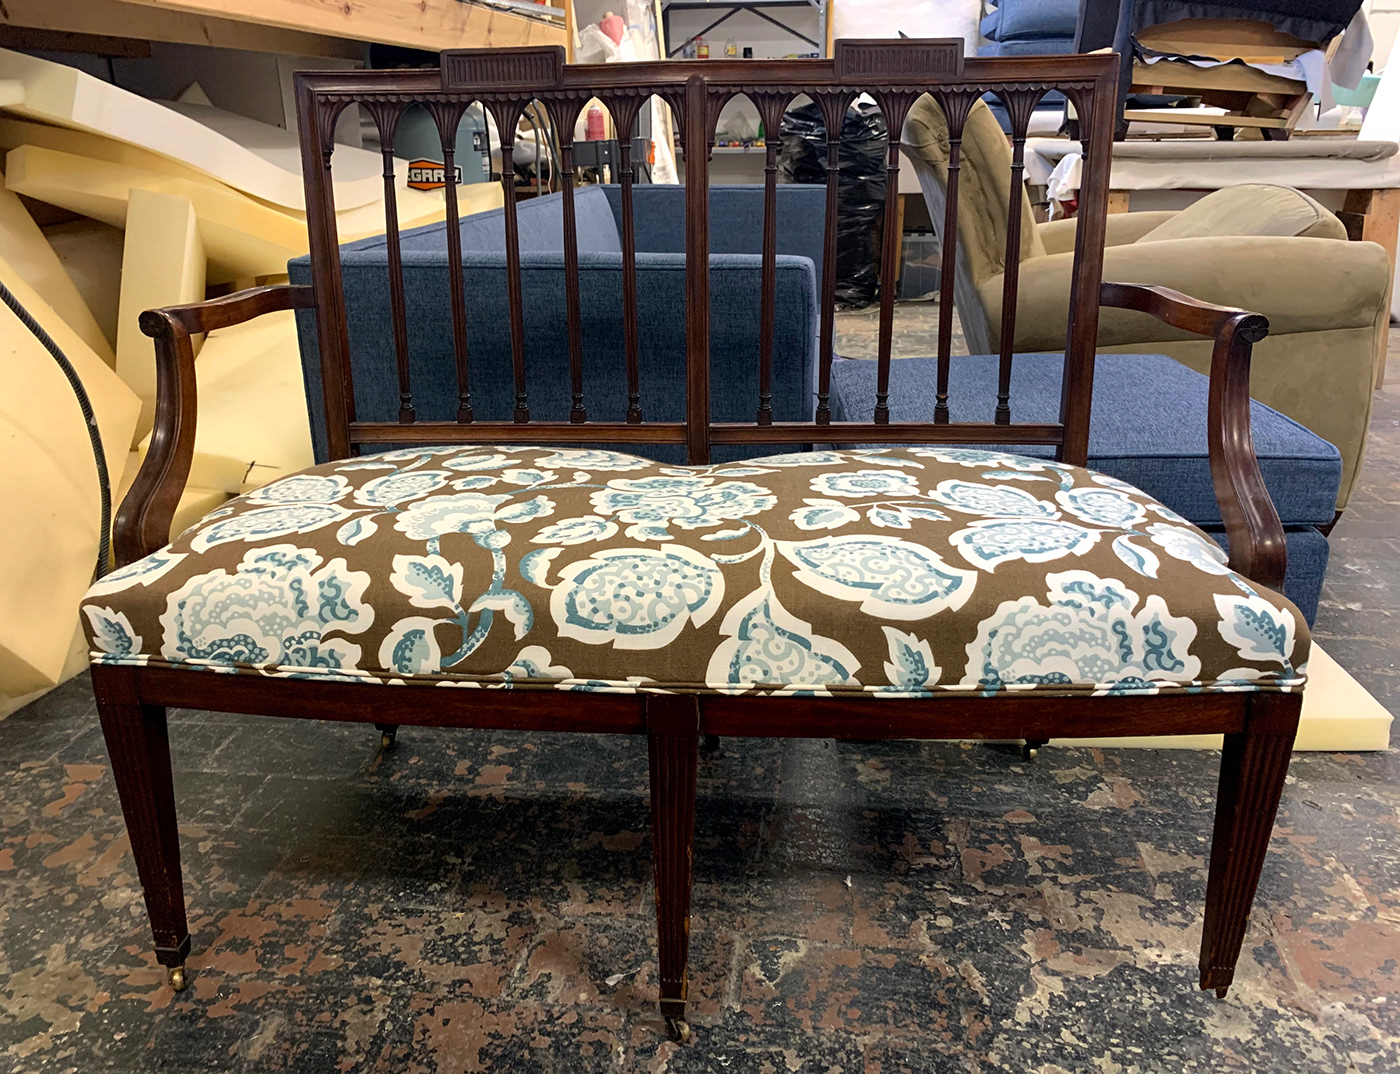 antique fabric furniture furniture design  Interior interior design  reupholstery settee upholstery vintage